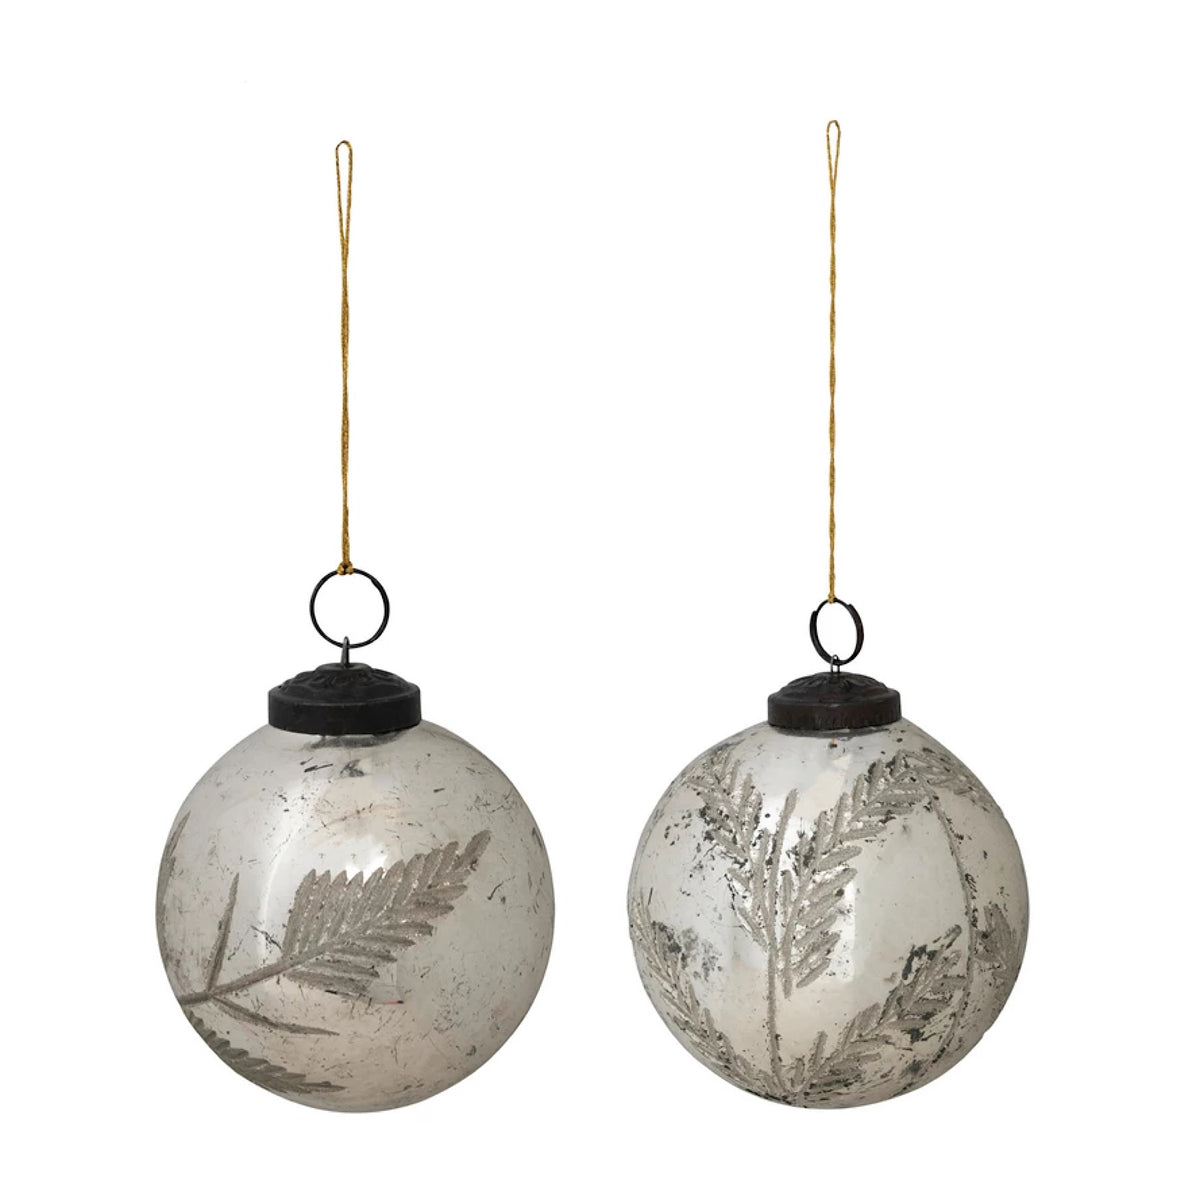 4&quot; Botanical Mercury Glass Ornaments, 2 Styles